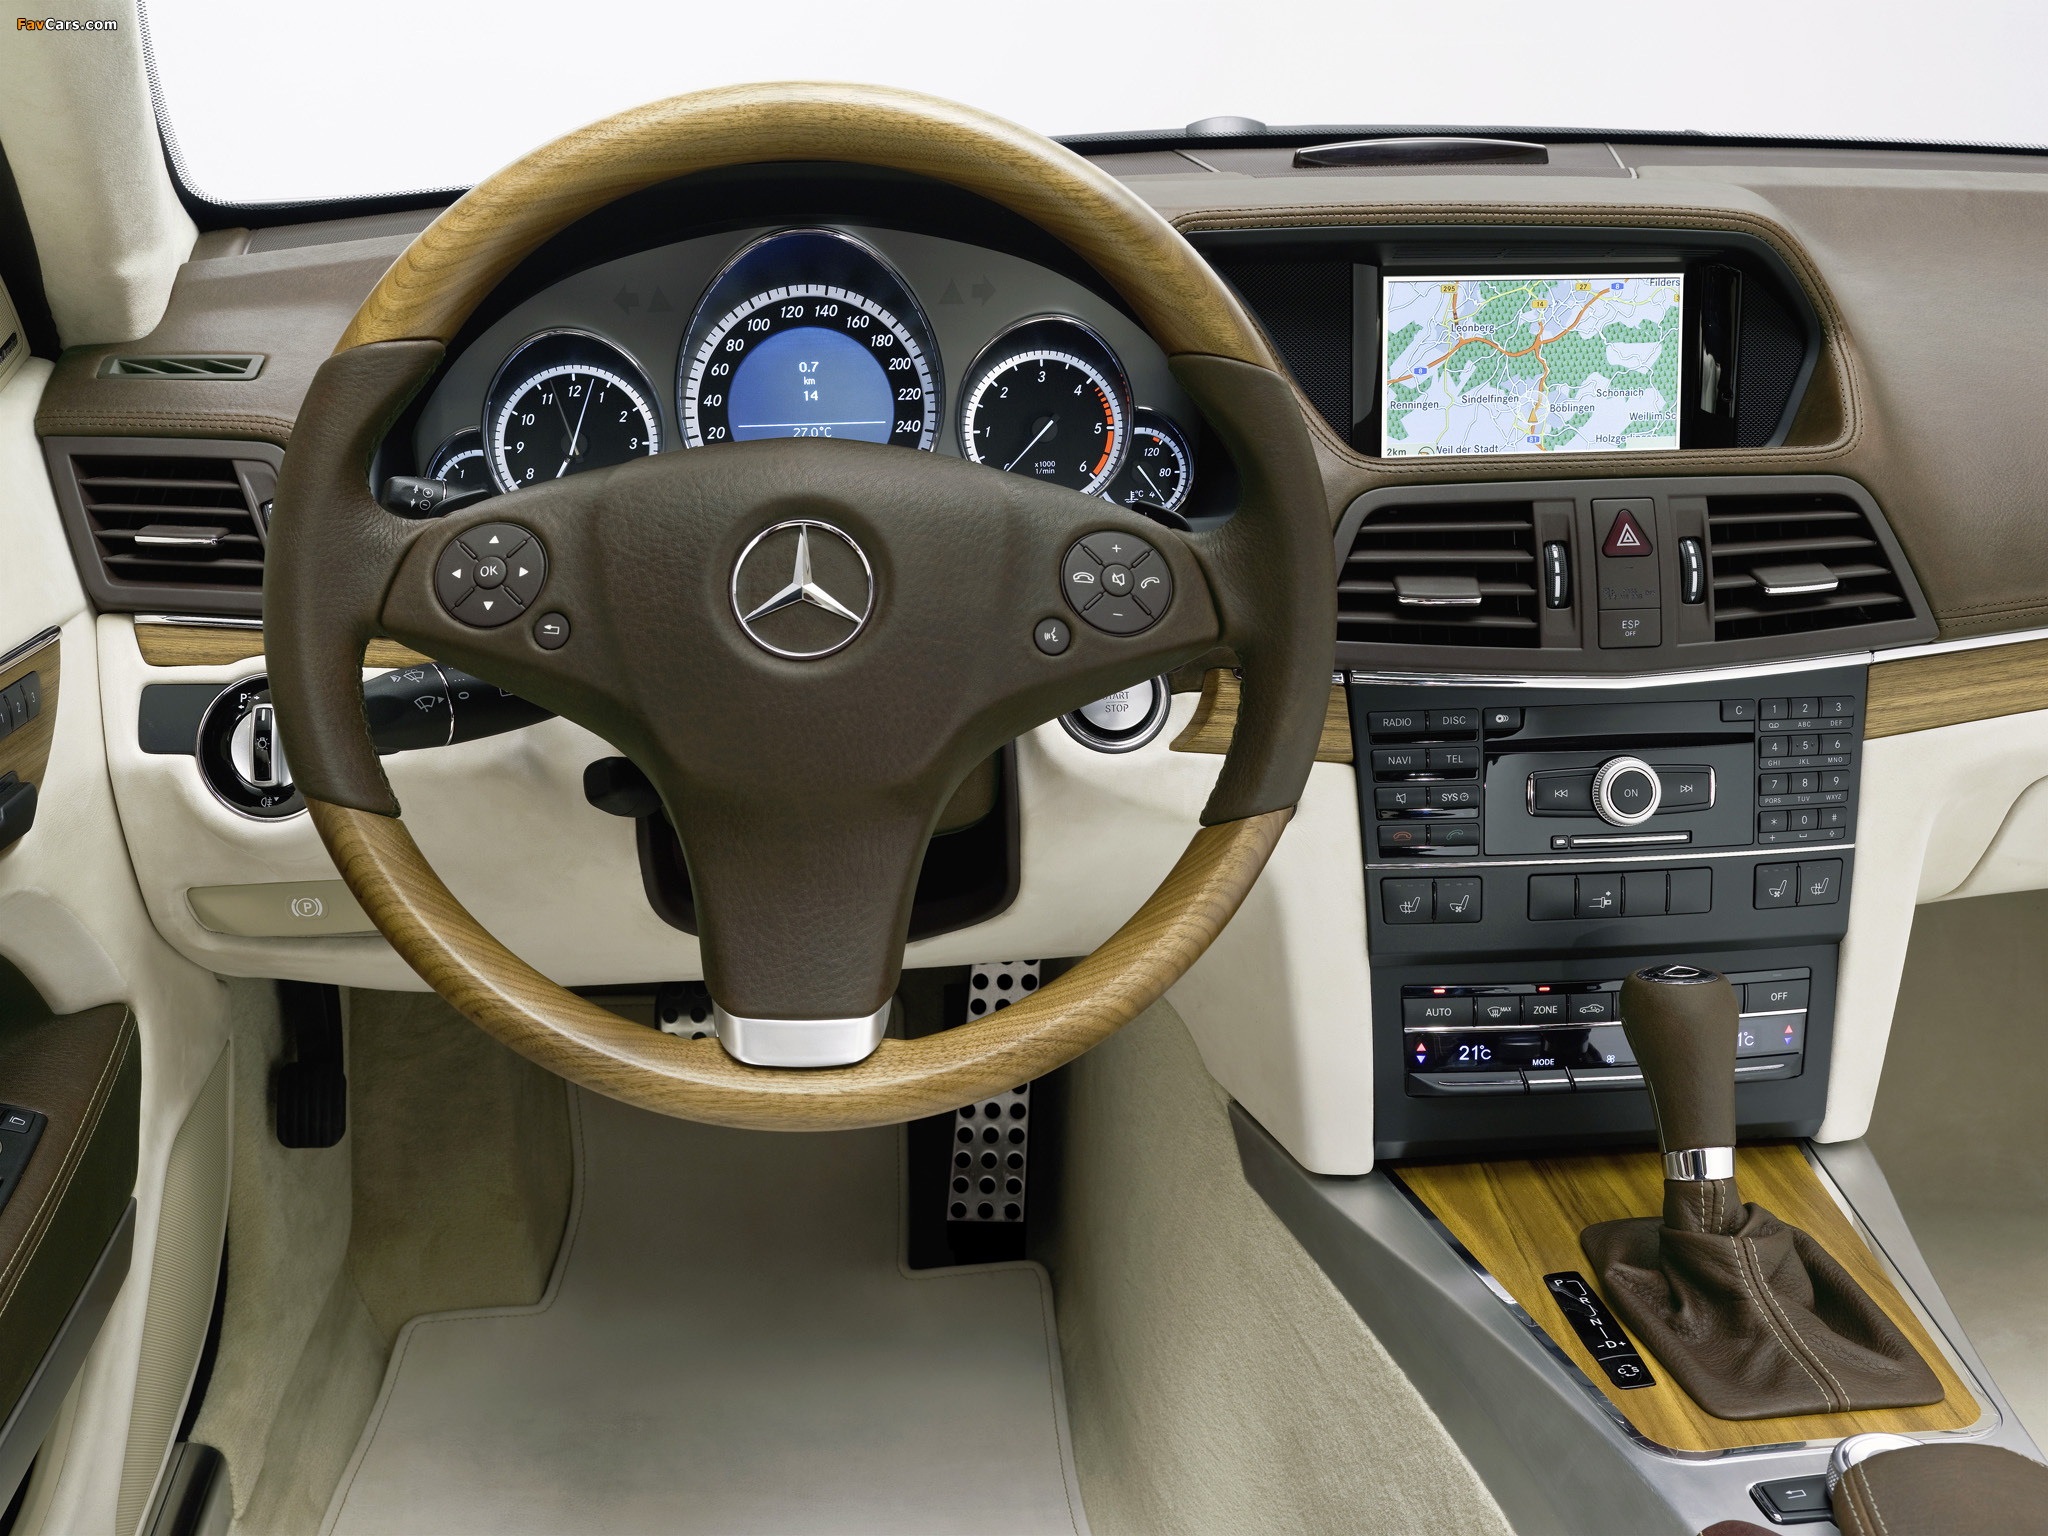 Mercedes-Benz Fascination Concept 2008 images (2048 x 1536)